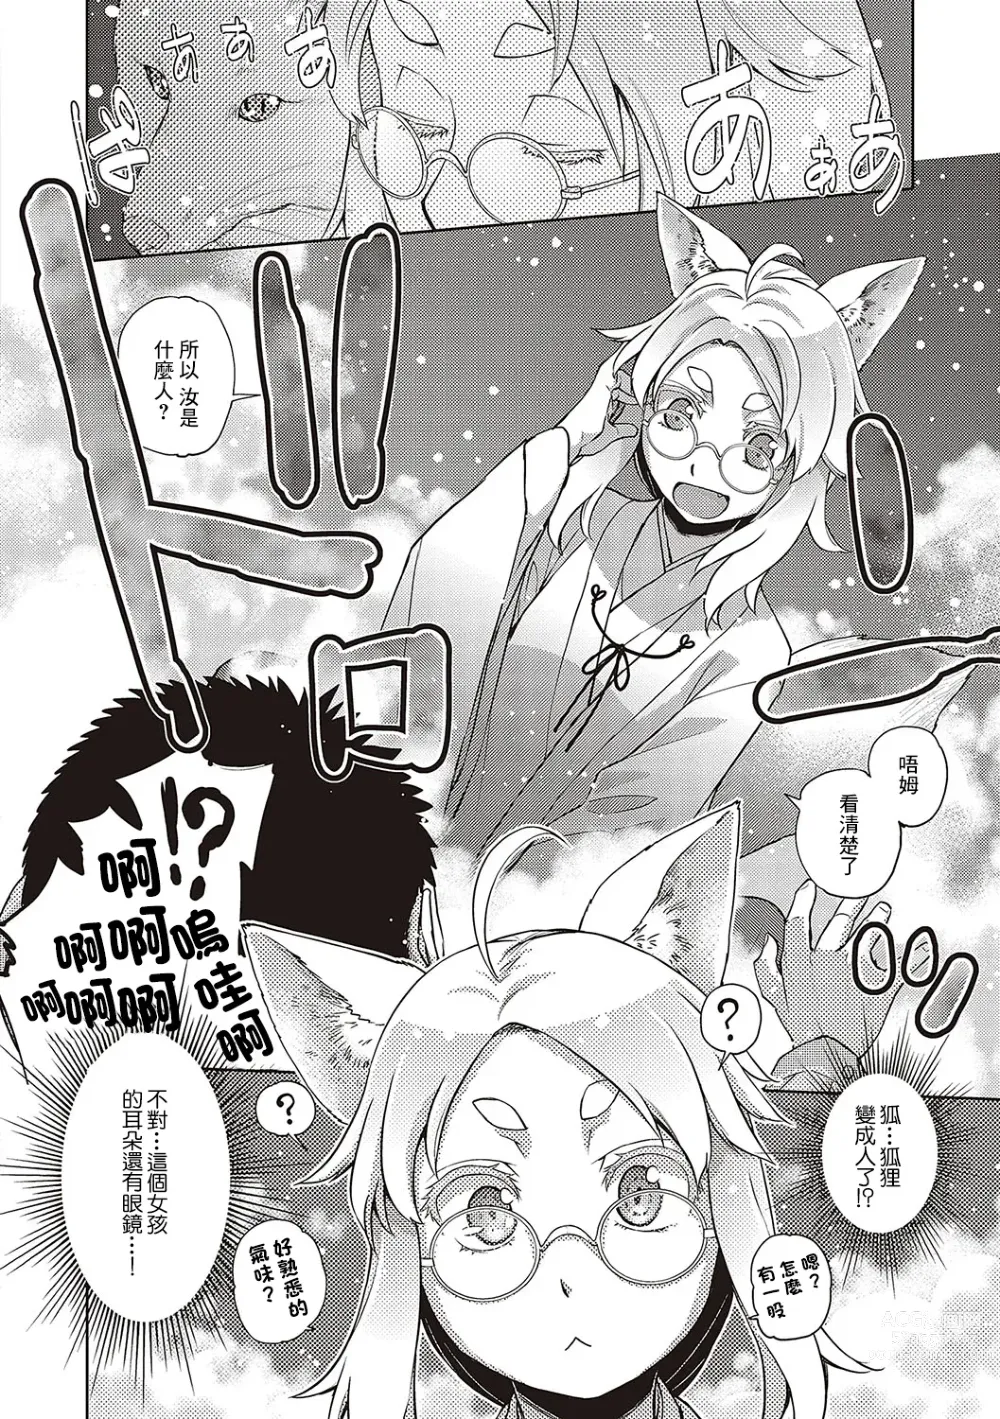 Page 4 of manga Mateba Megane no Kitsune Ari